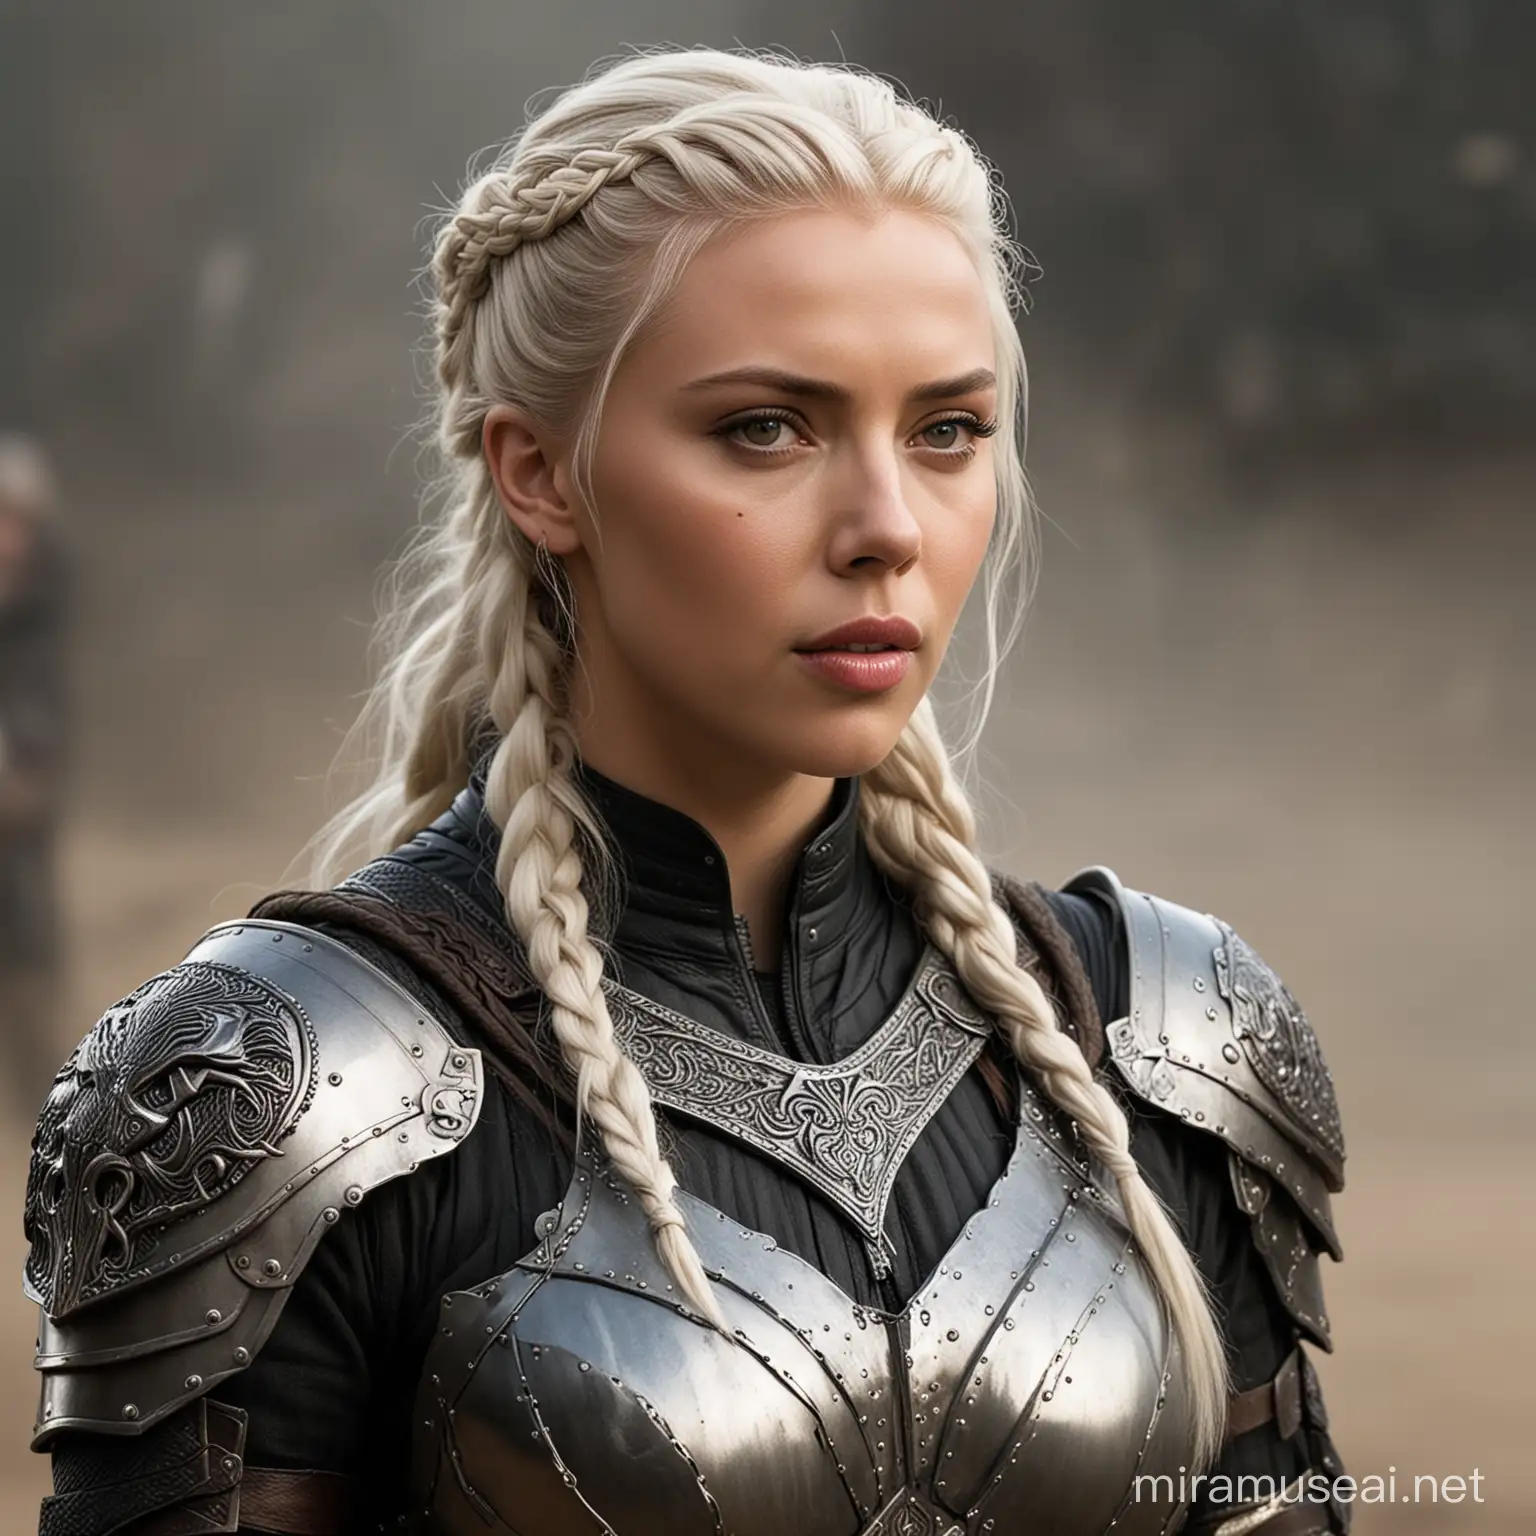 Scarlett Johansson as Muscular Targaryen Knight with Braided White Hair